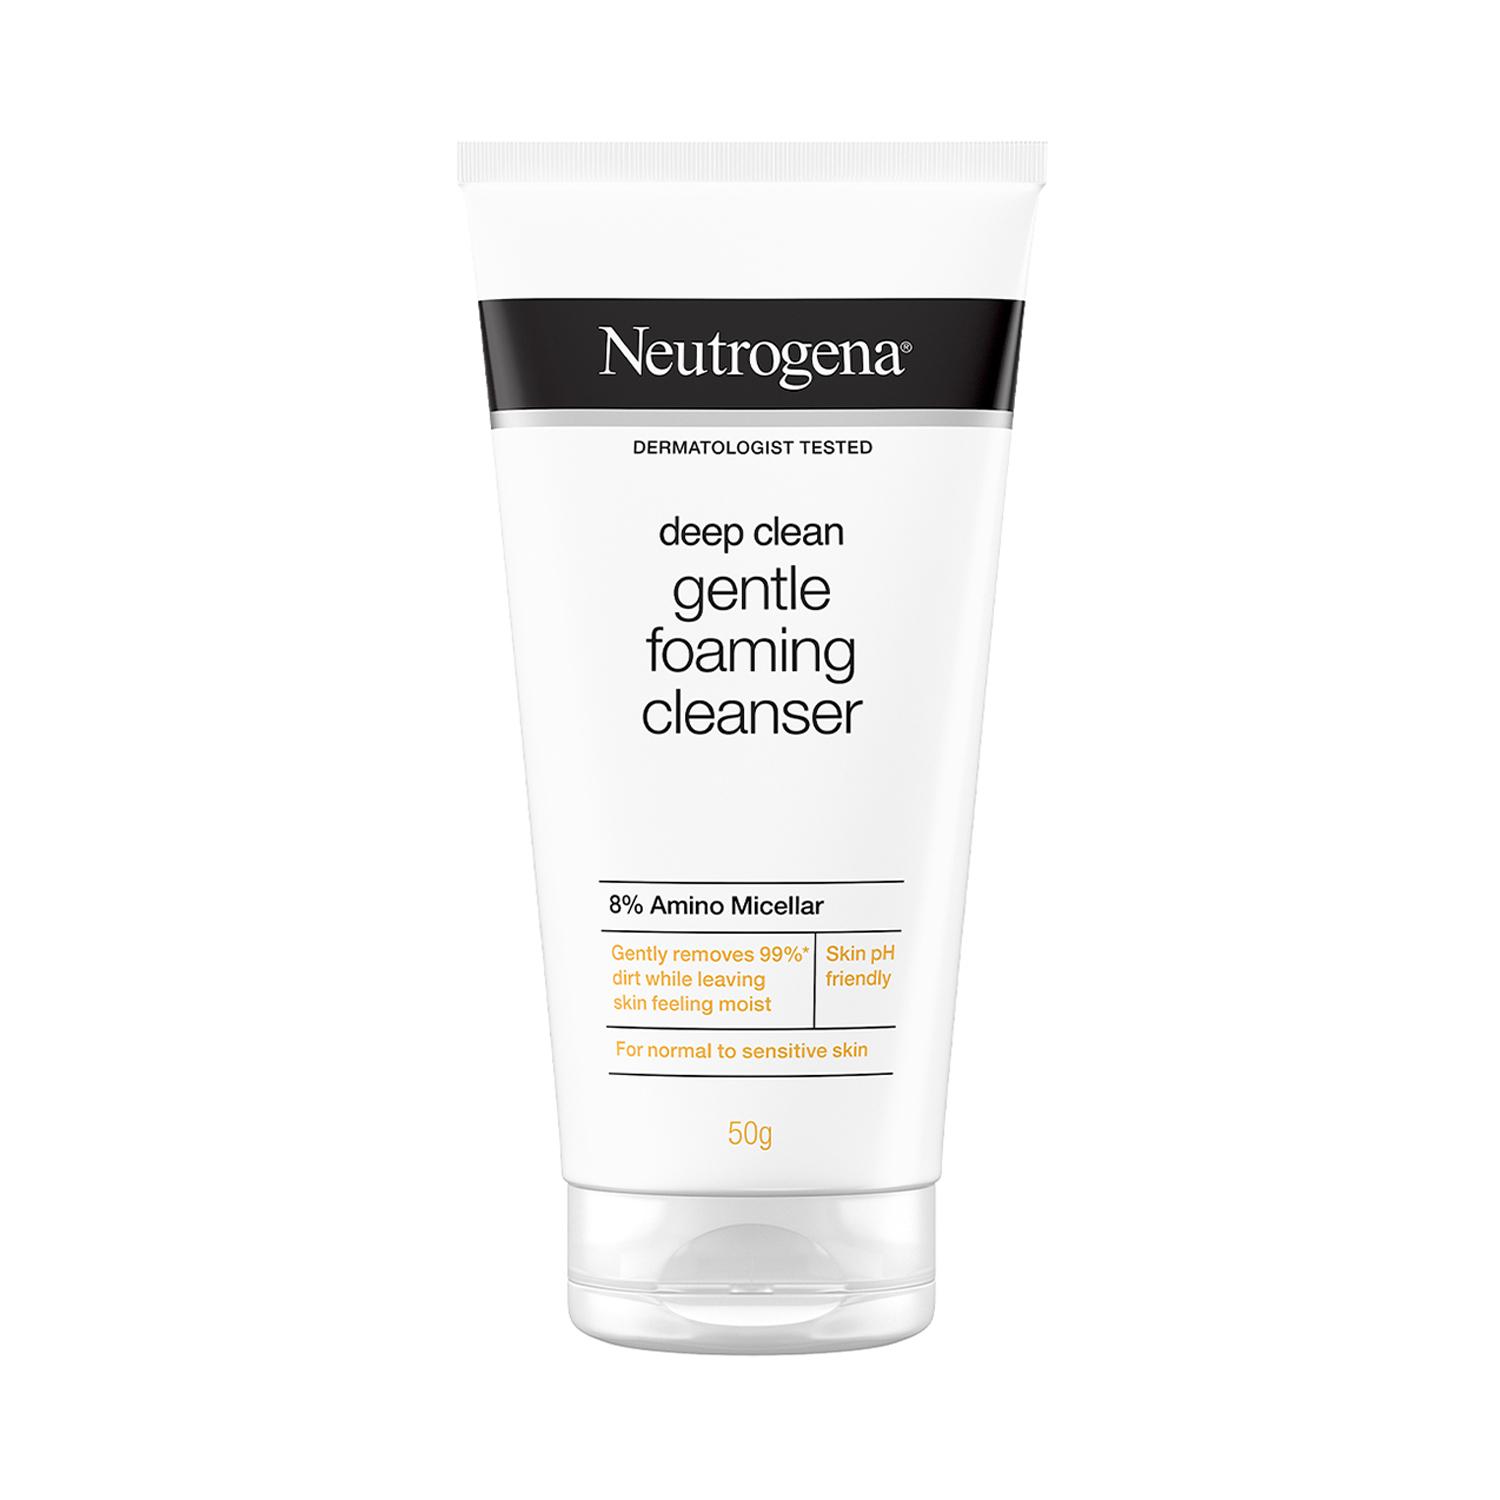 Neutrogena Deep Clean Gentle Foaming Cleanser (50g)